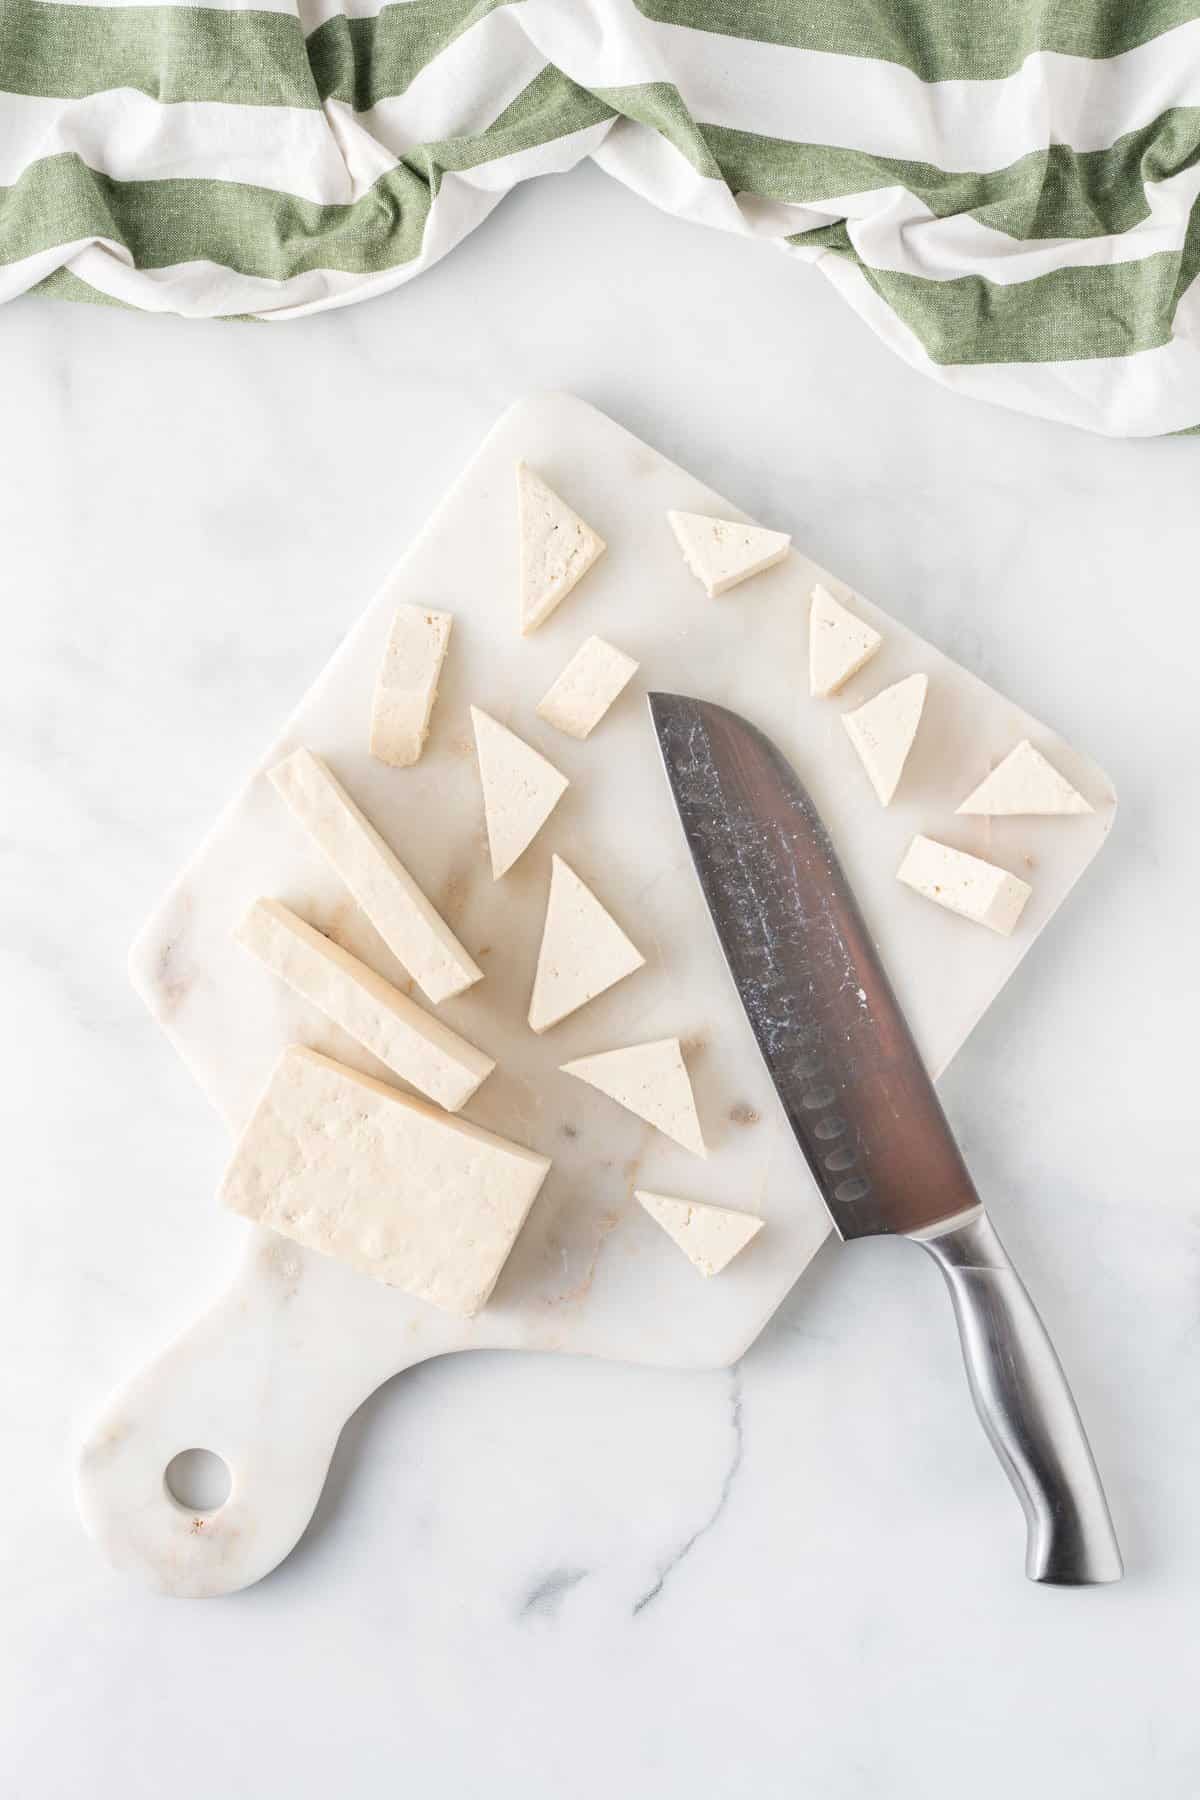 cutting the tofu into triangles